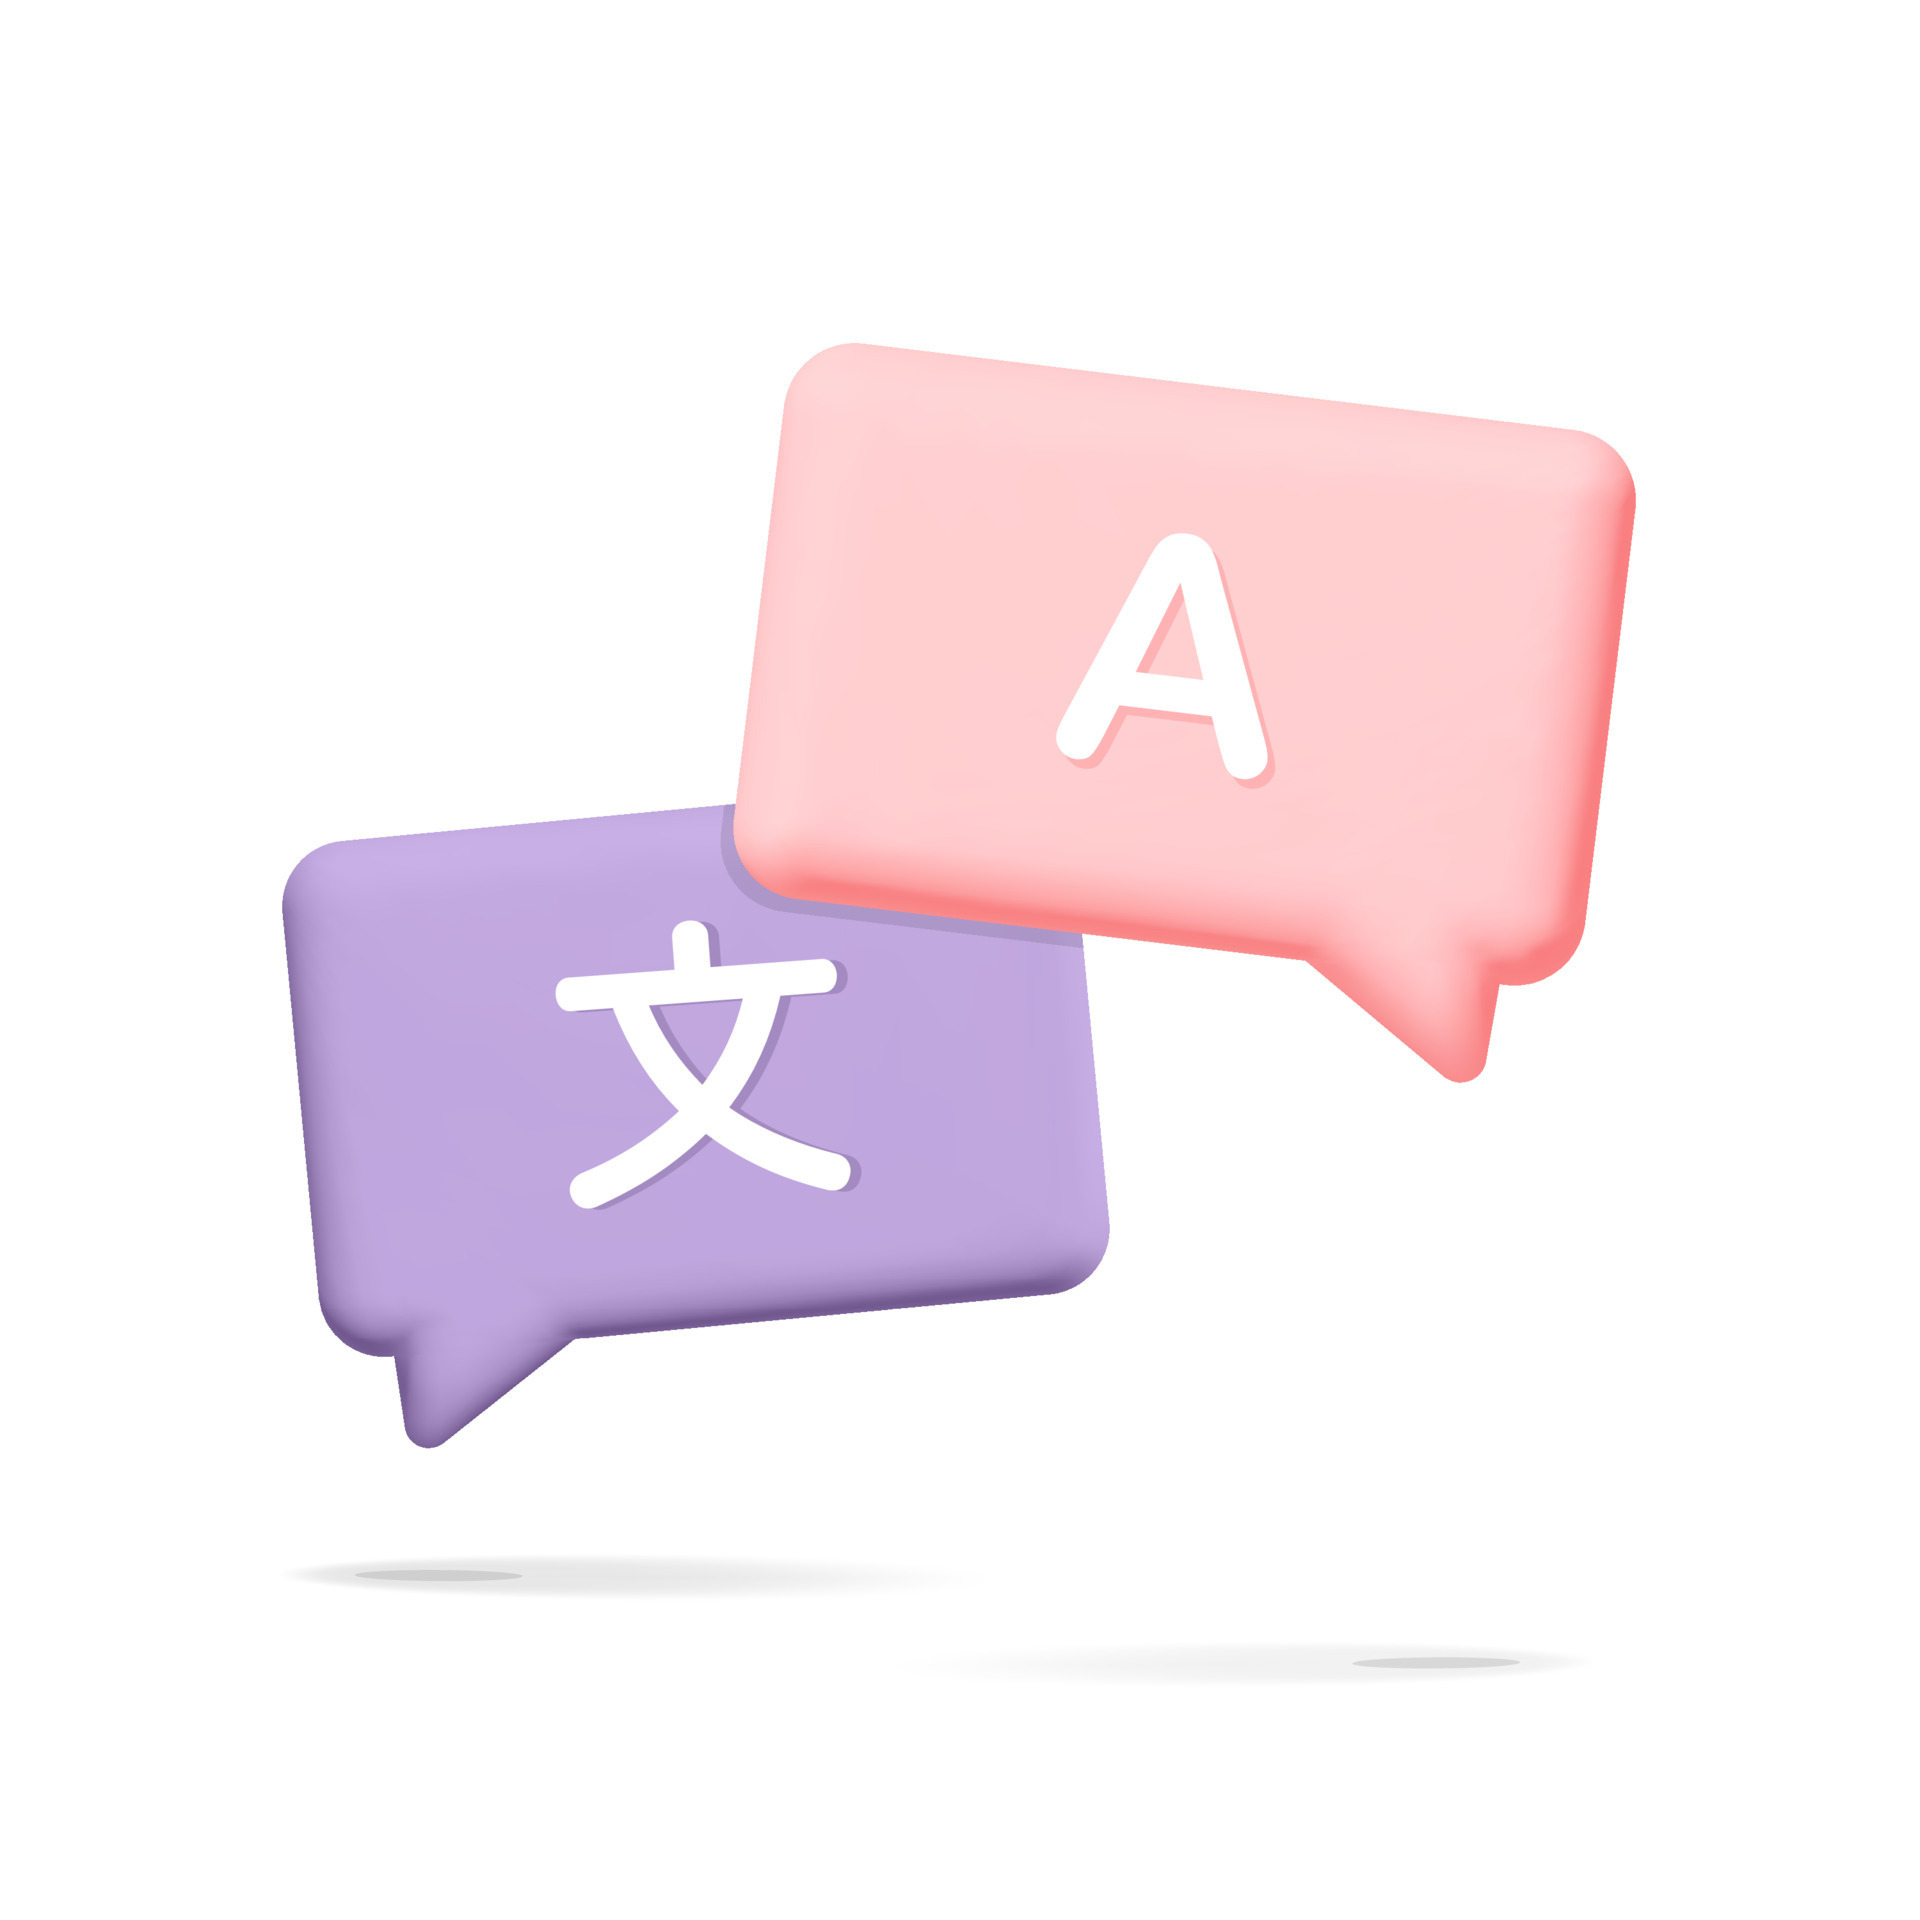 Cute symbol translation translate cute symbol tool for your emojis